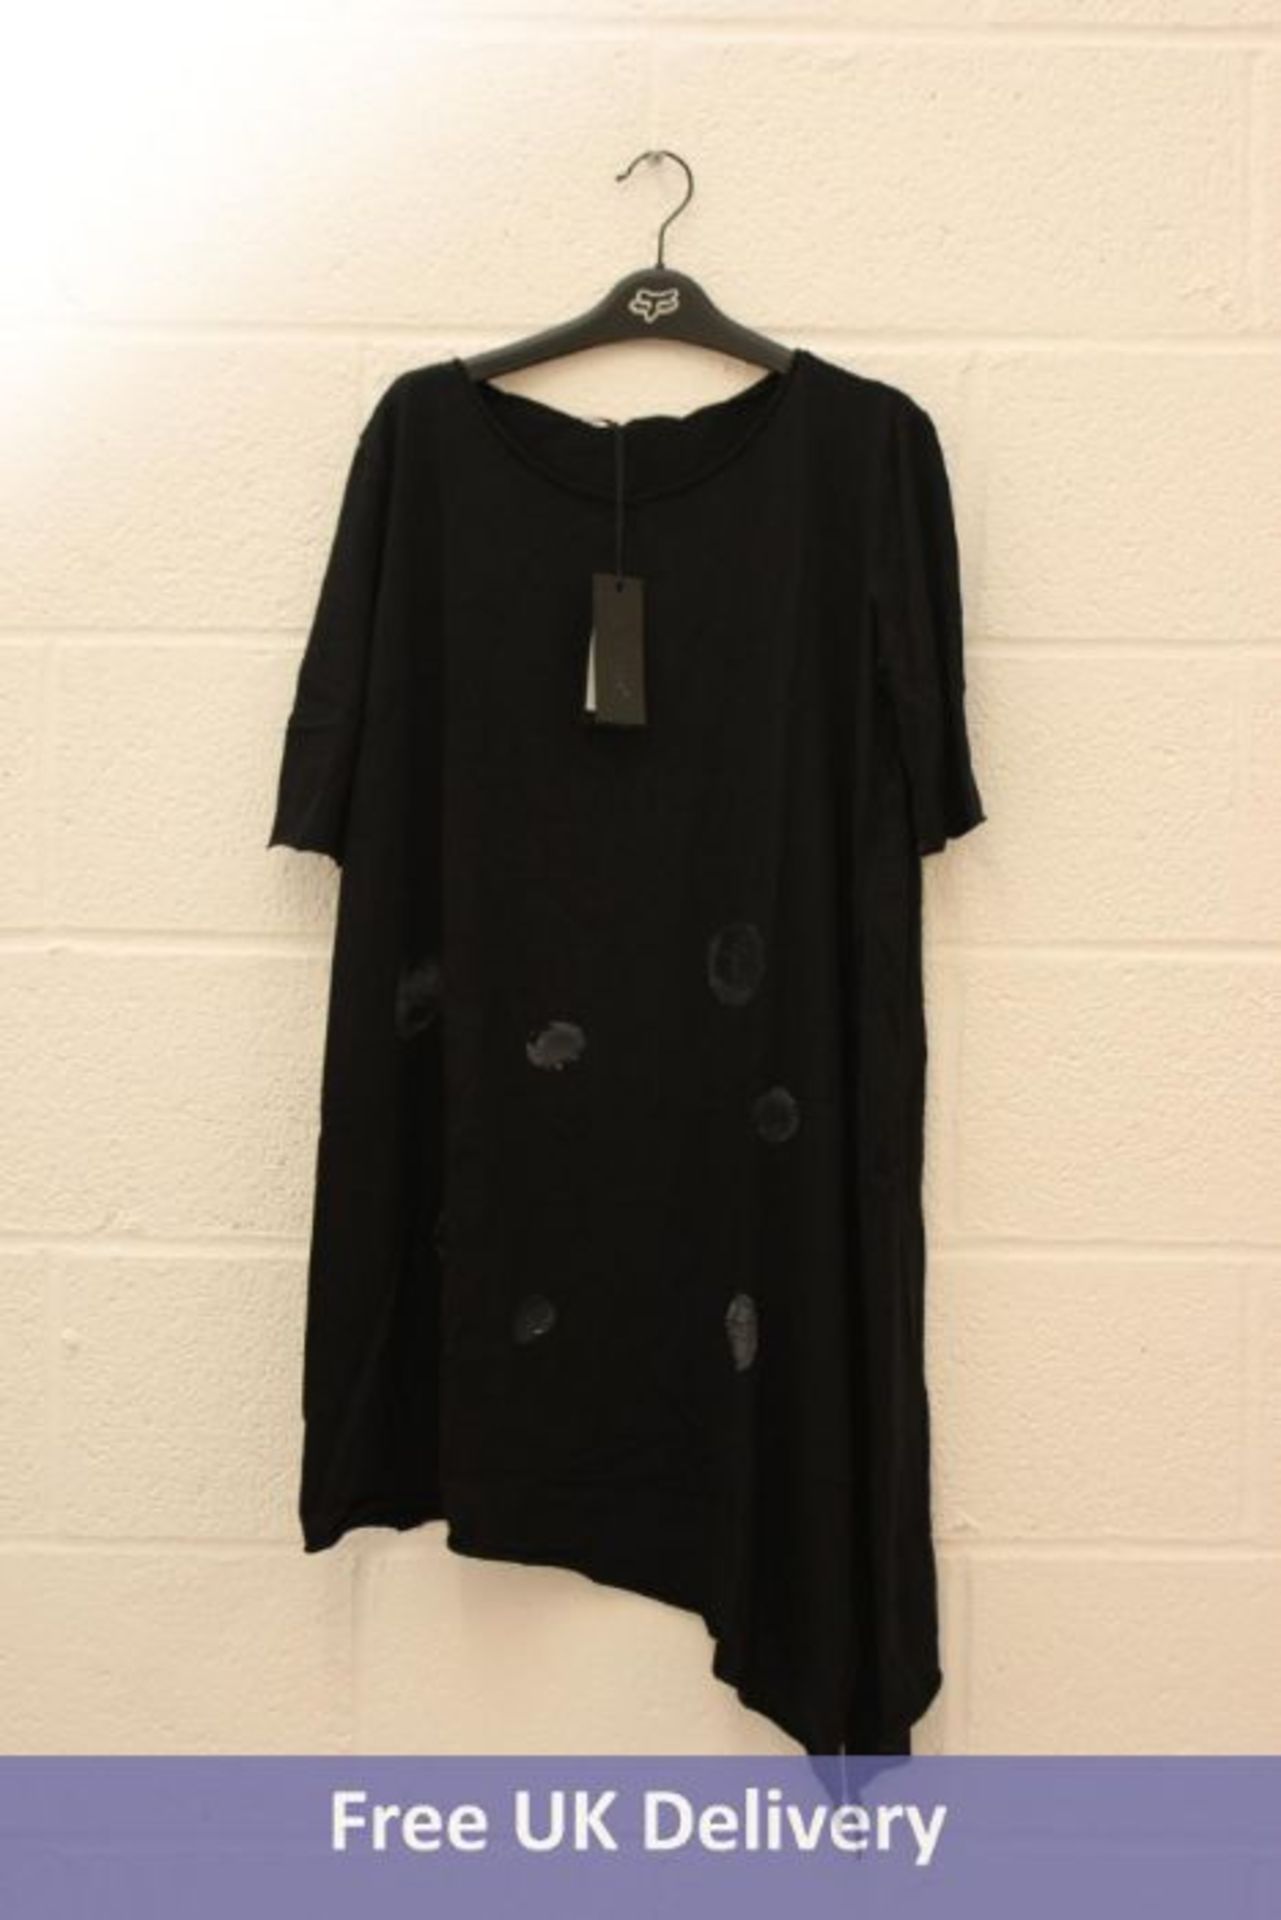 Kedziorek Women's Dress, Black, Size 40